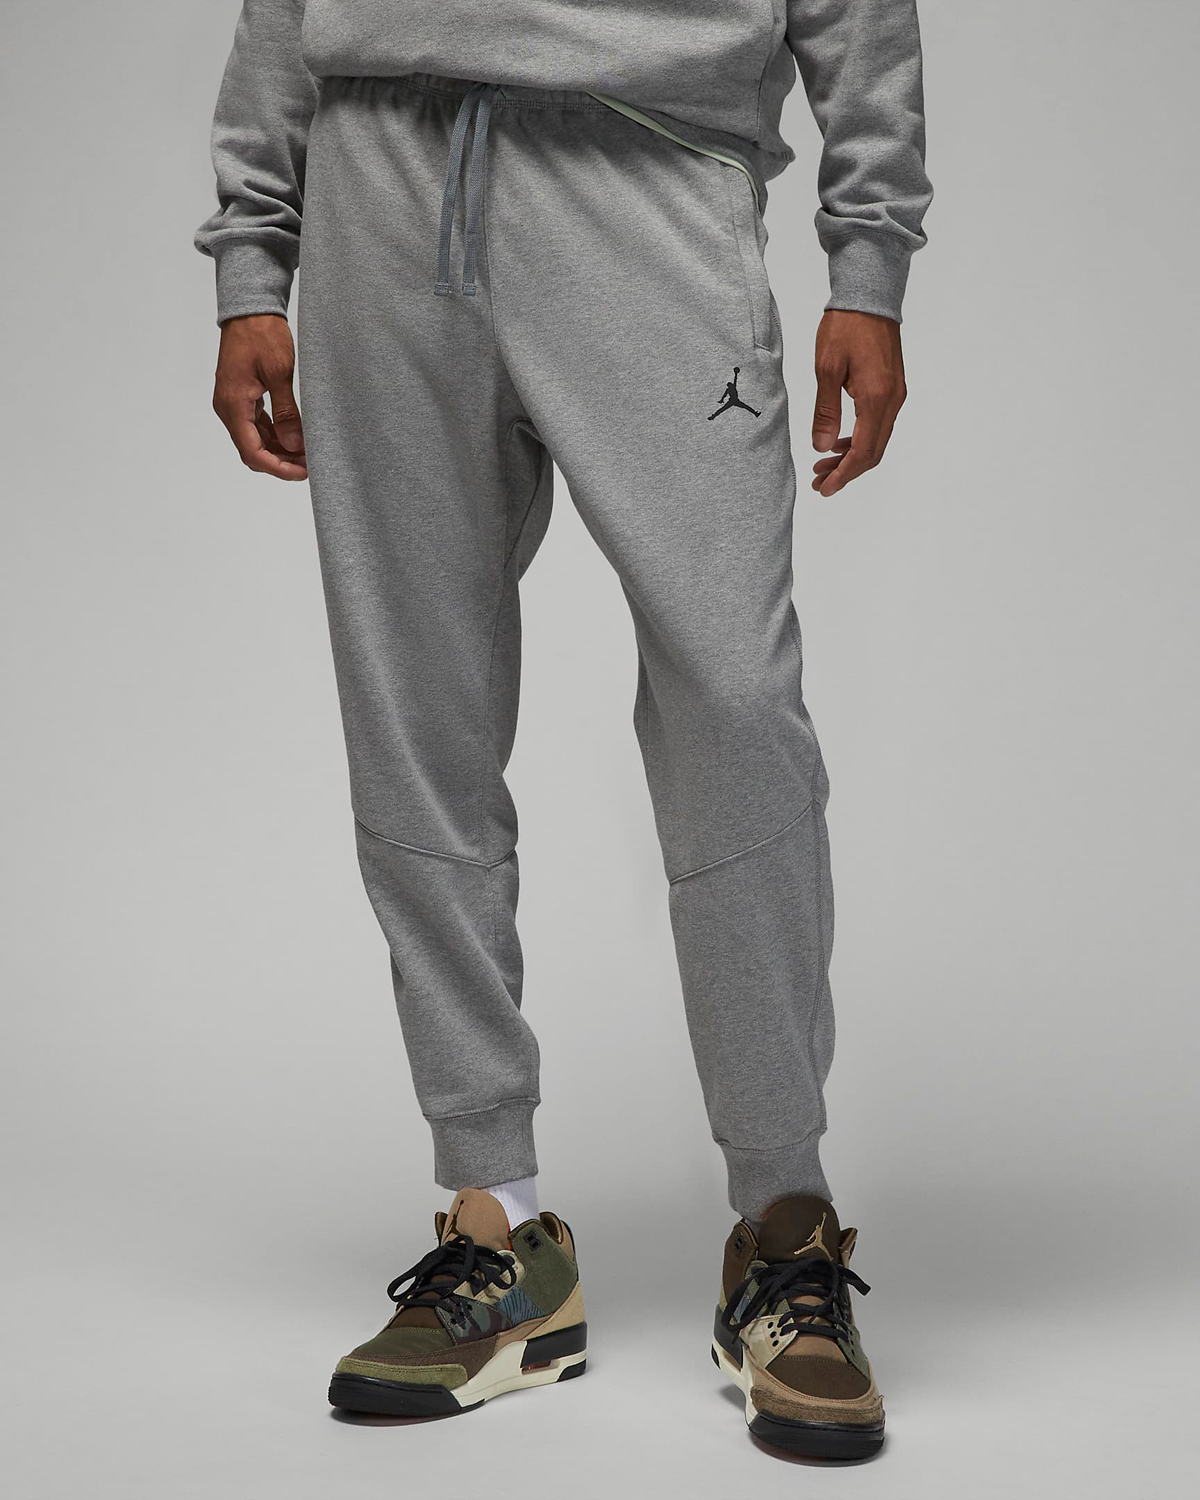 Jordan-Dri-Fit-Sport-Fleece-Pants-Grey-Carbon-Heather-1